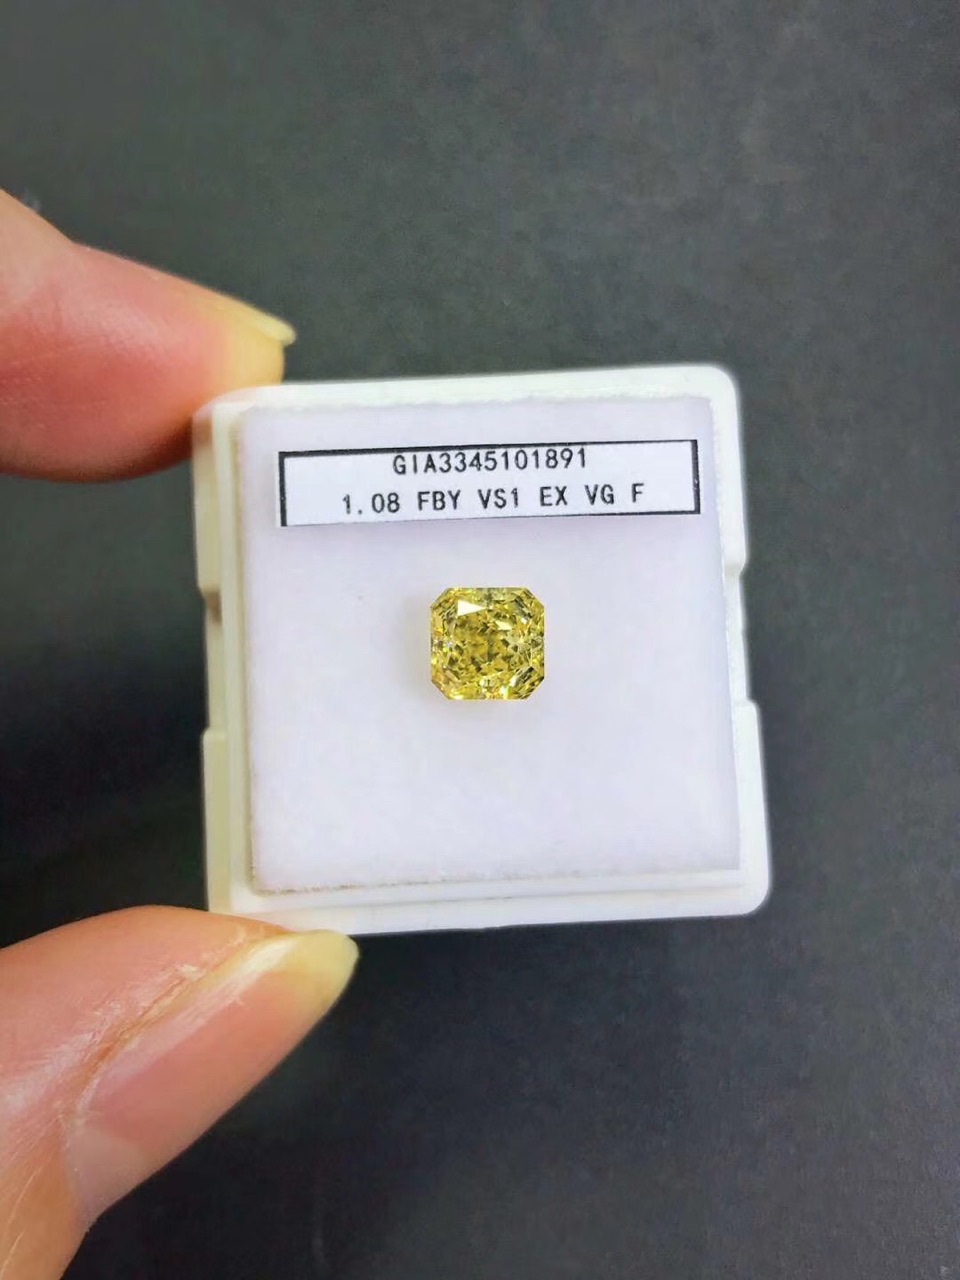 GlA钻石全球快搜结婚戒经典超显大群镶钻戒18K白金铂金Pt加工定制